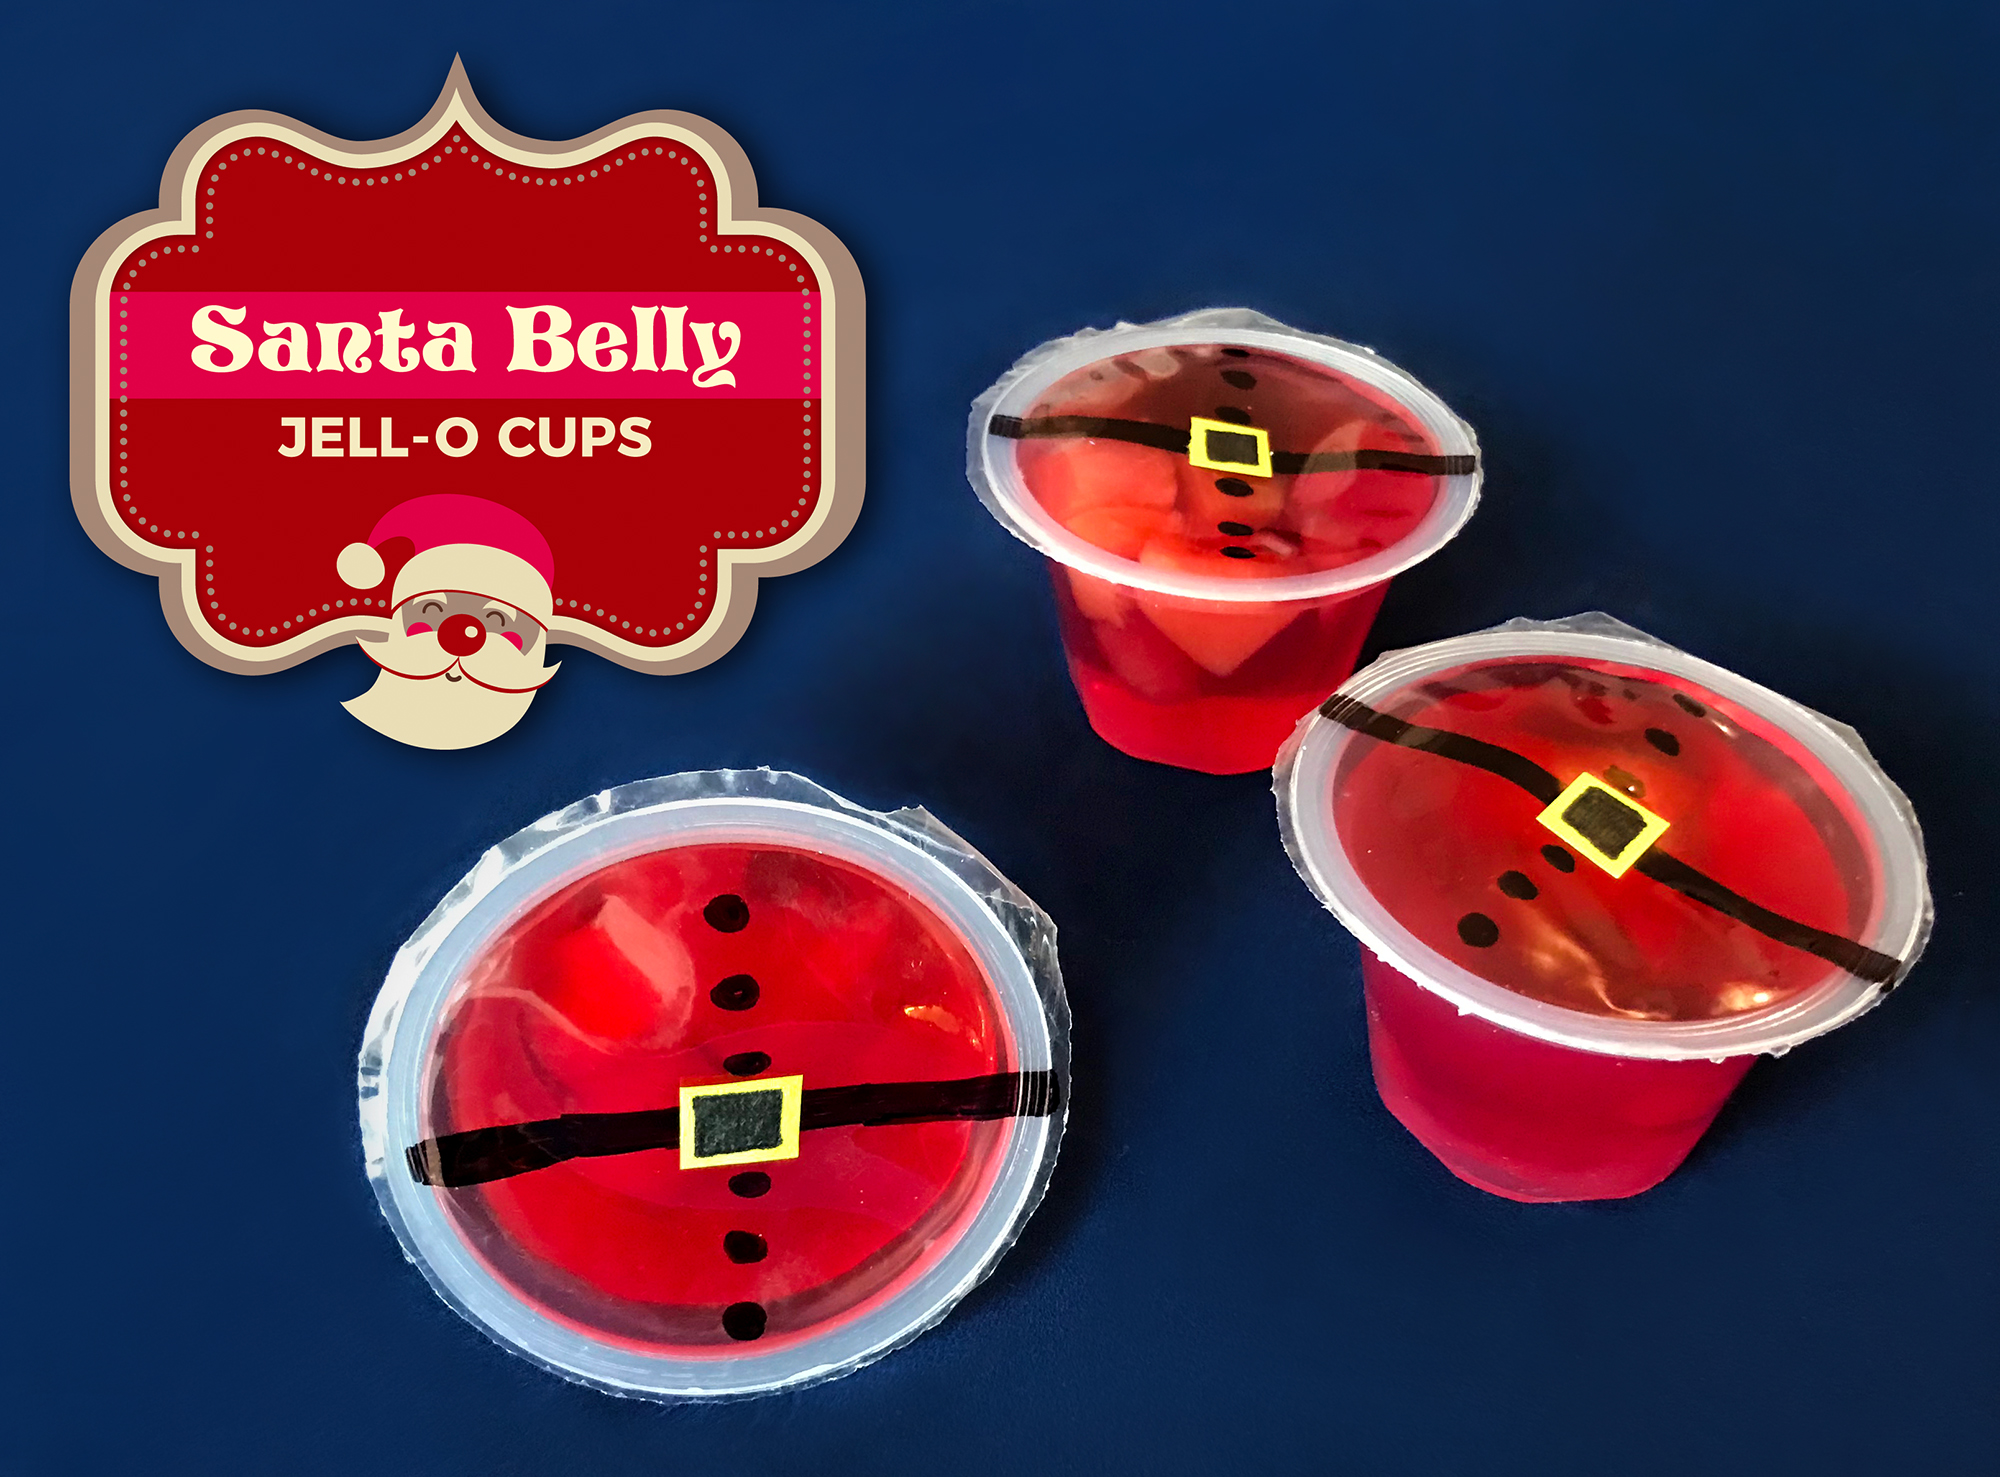 Santa Belly Jell-o Cups